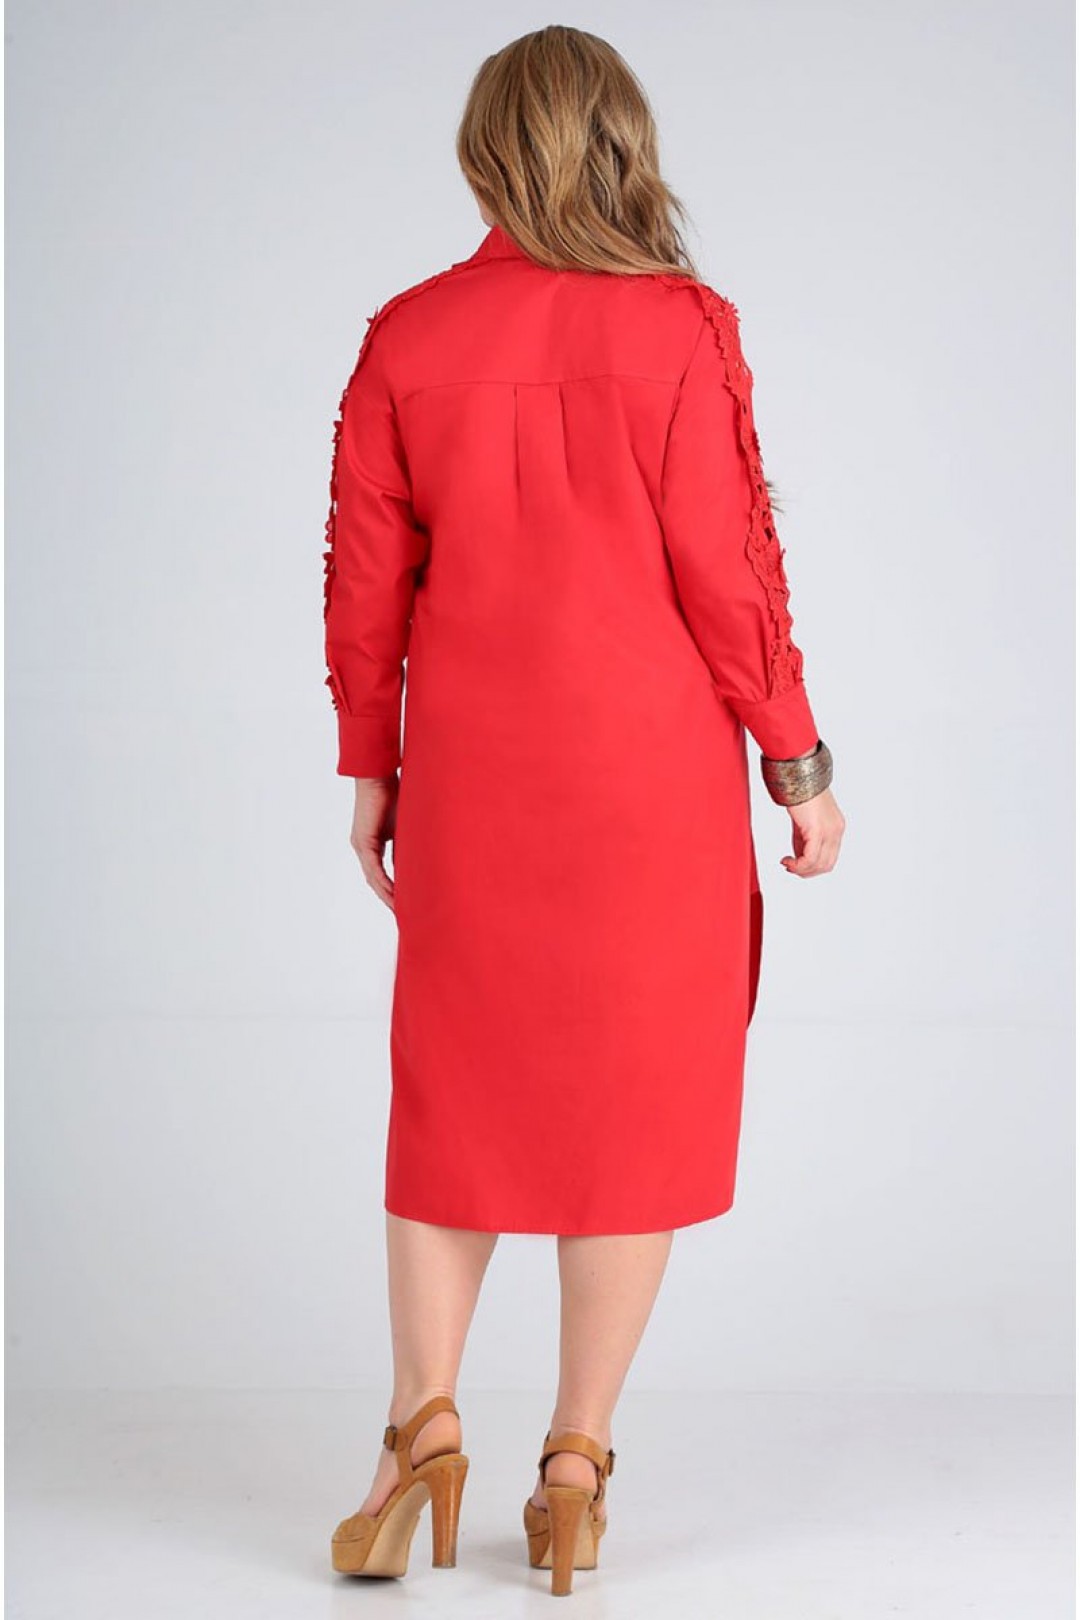 Платье Таир-Гранд 6547 красный